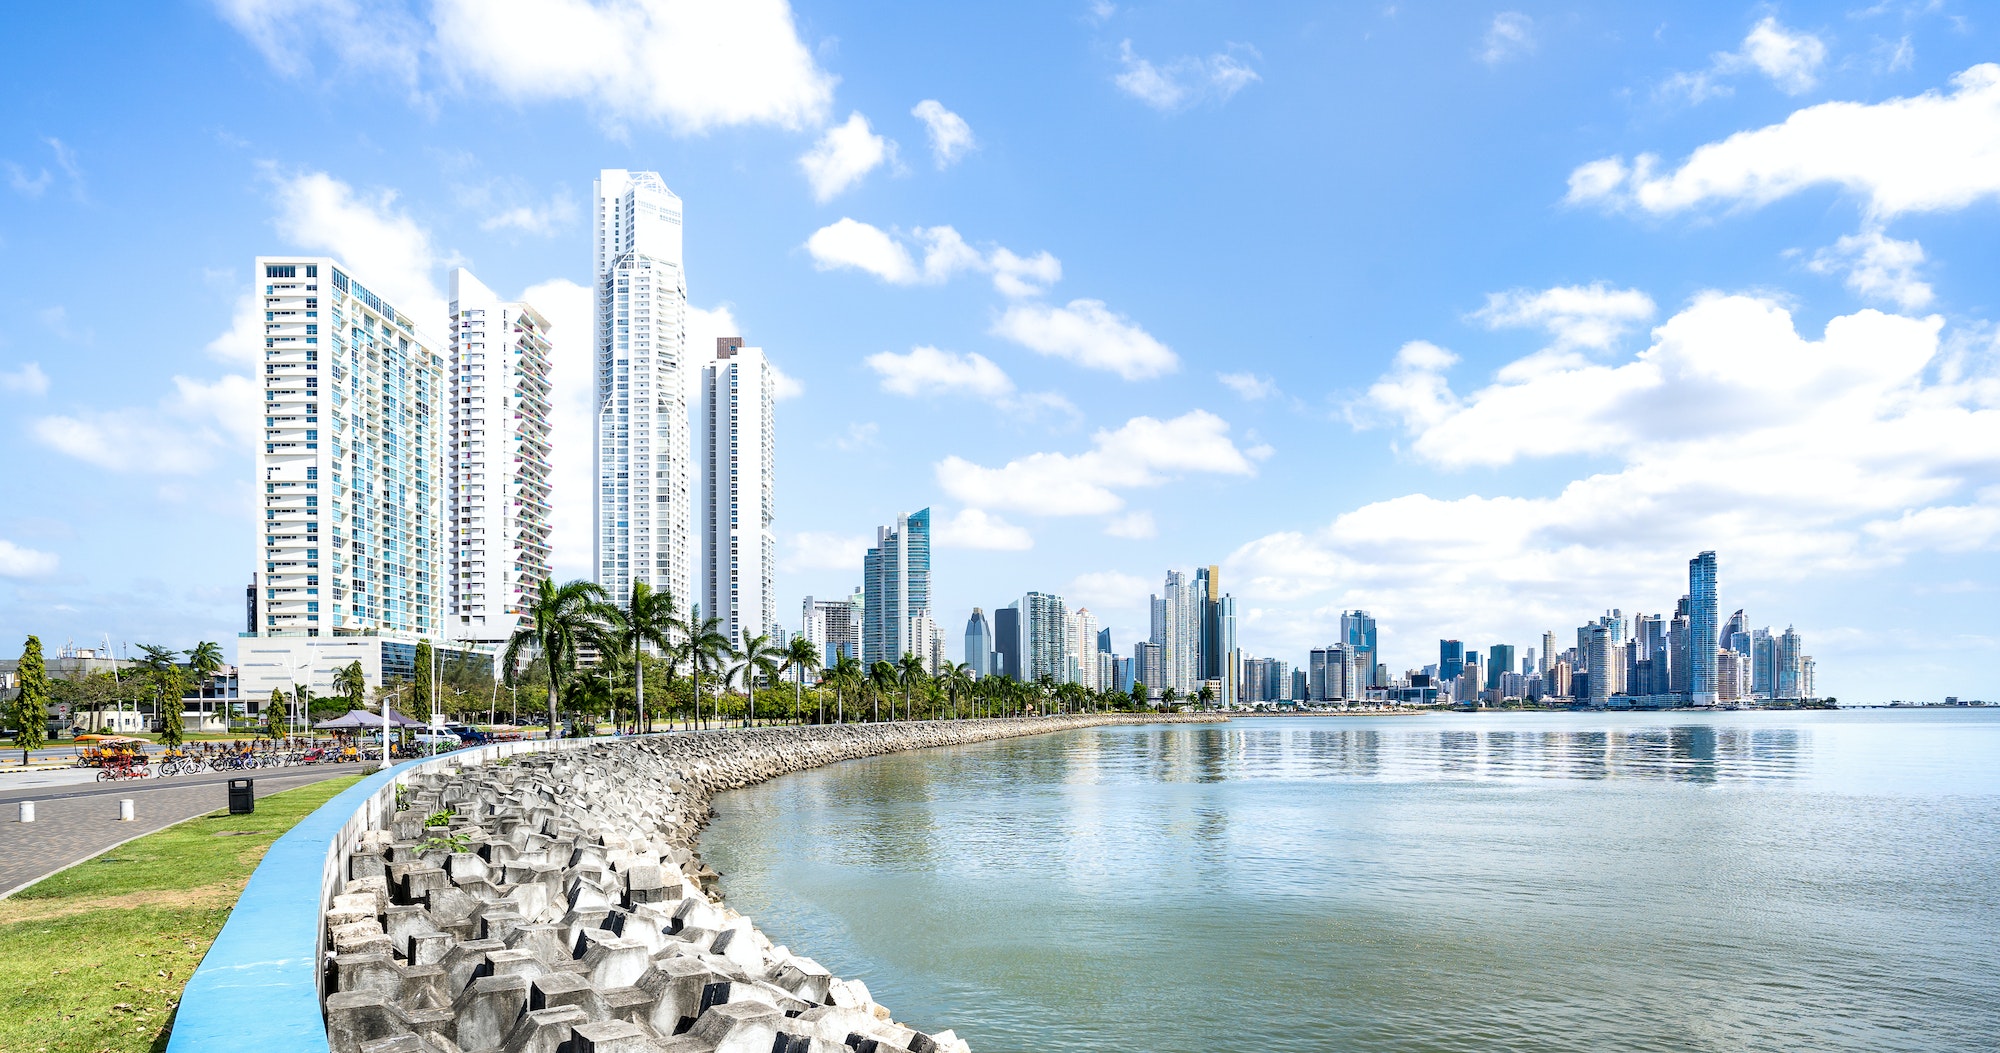 Panorama view of modern skyline at Panama City waterfront